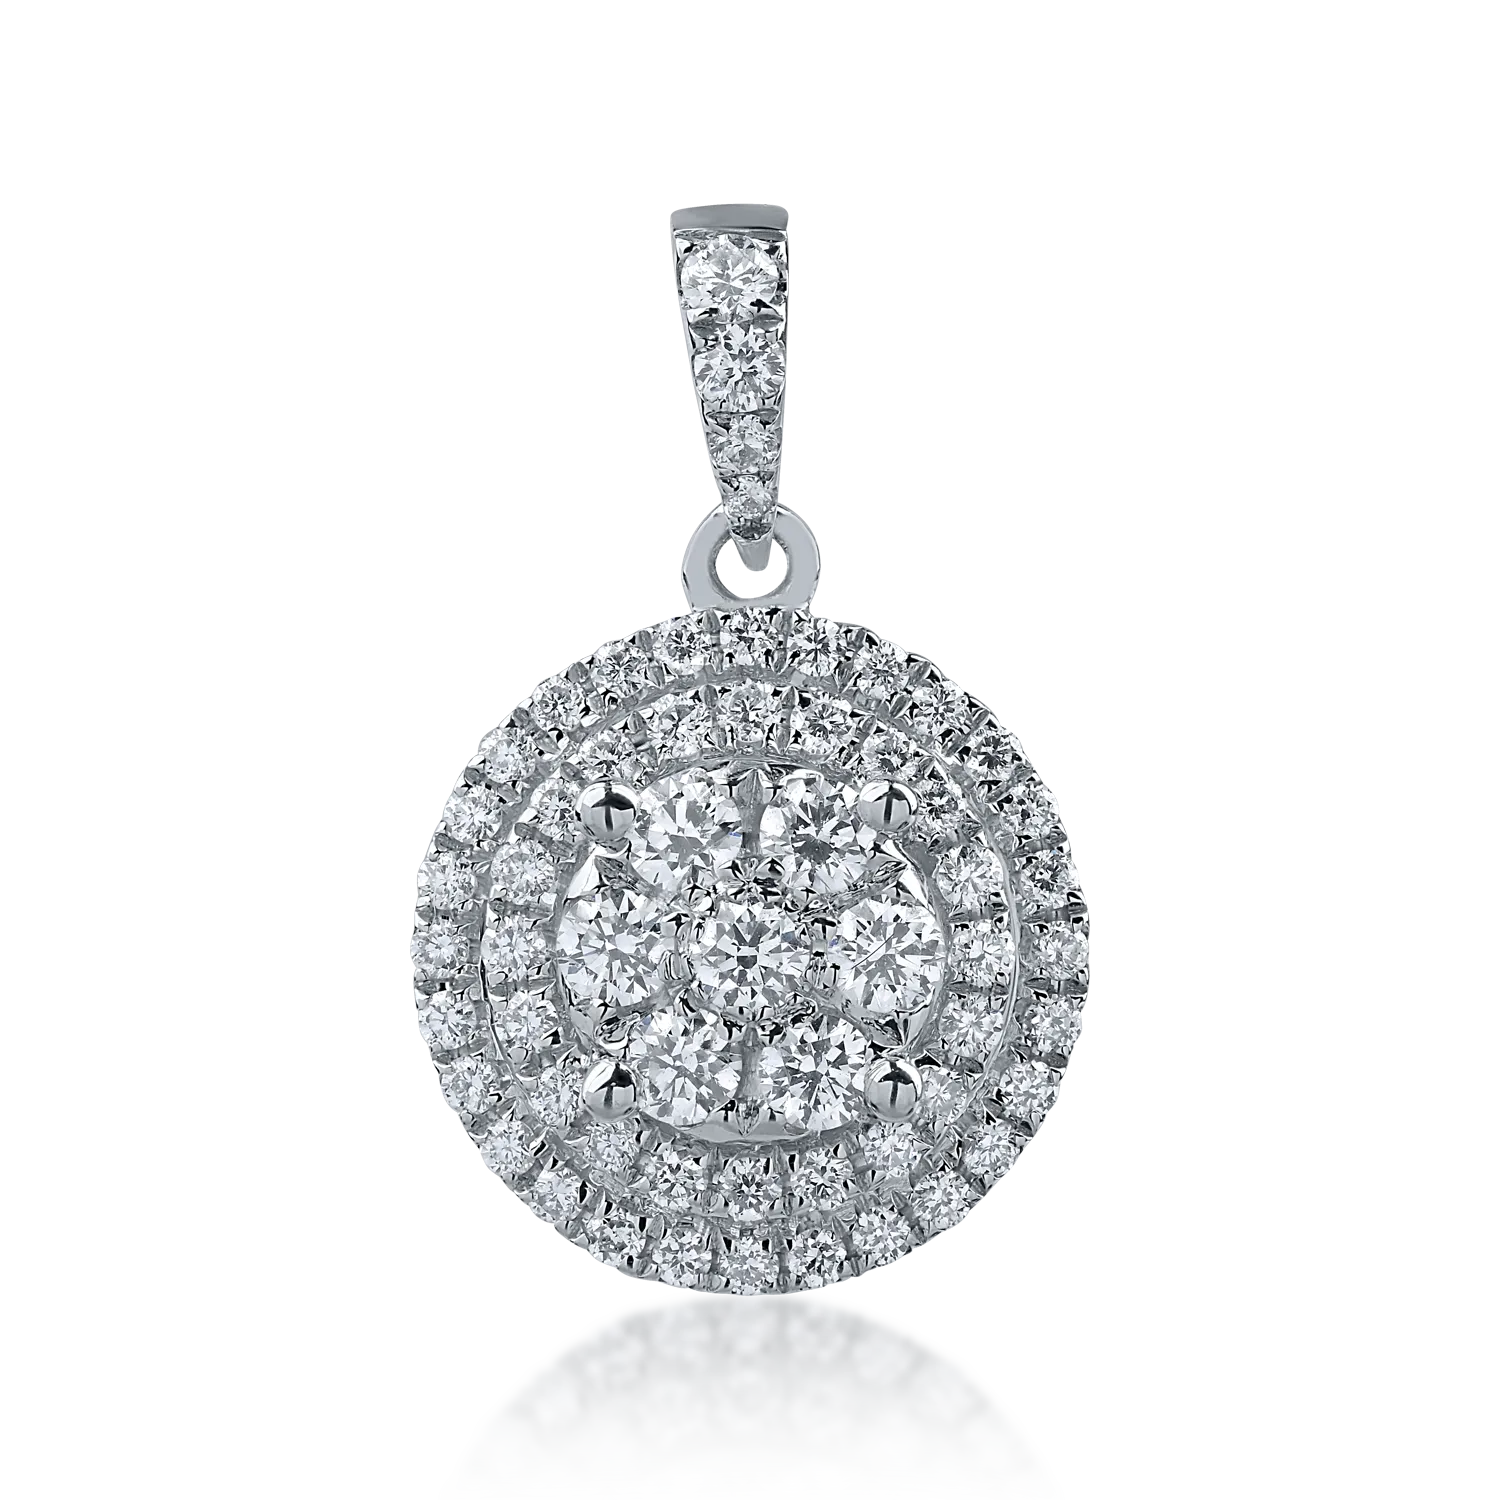 White gold pendant with 0.37ct diamonds